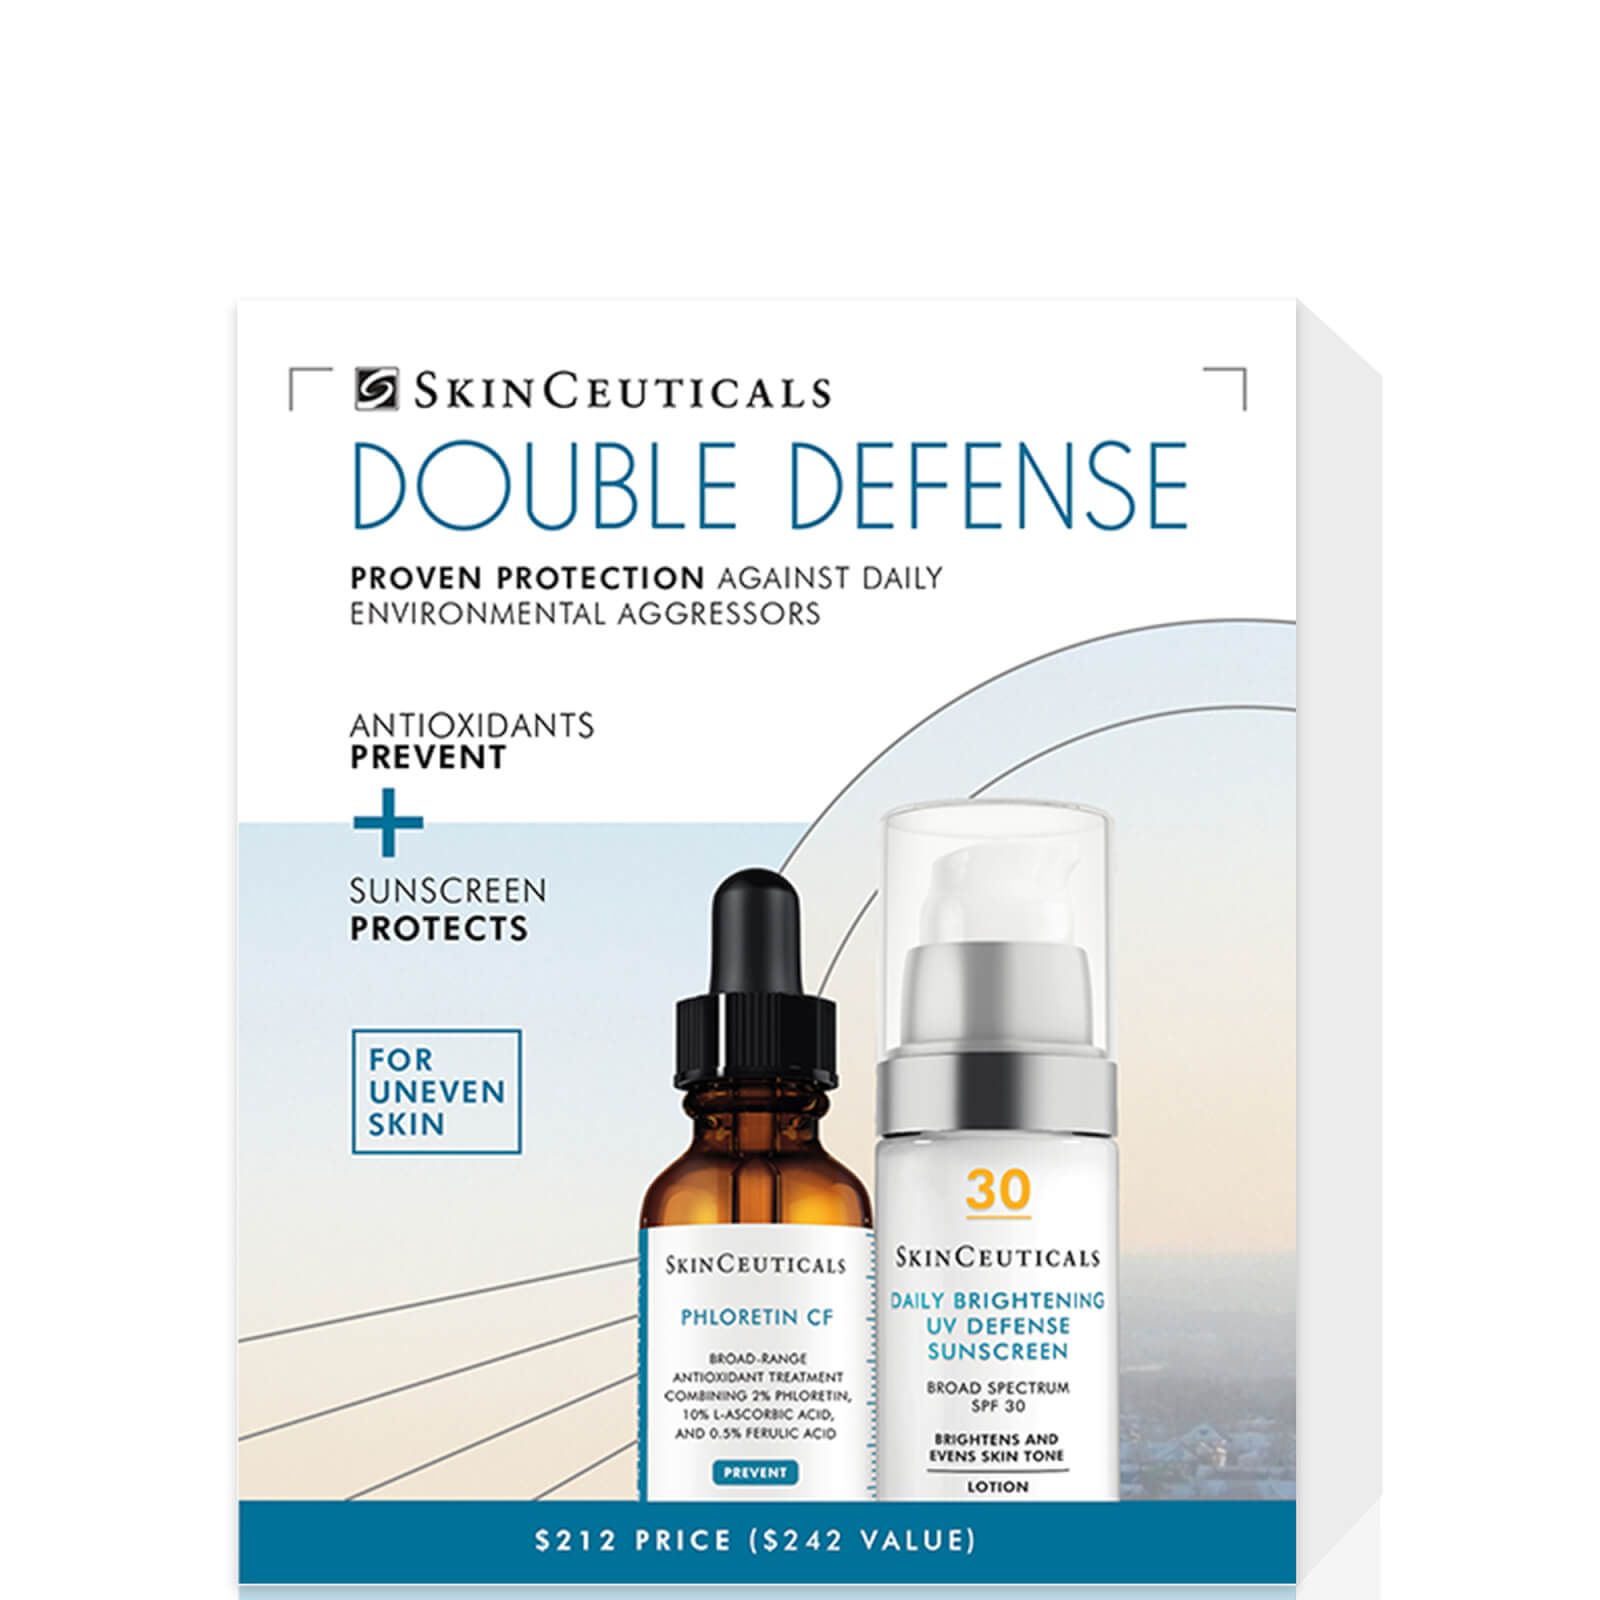 Shop Skinceuticals Double Defense Kit: Phloretin Cf + Daily Brightening Uv Defense Sunscreen Spf 30 (worth $242.00)